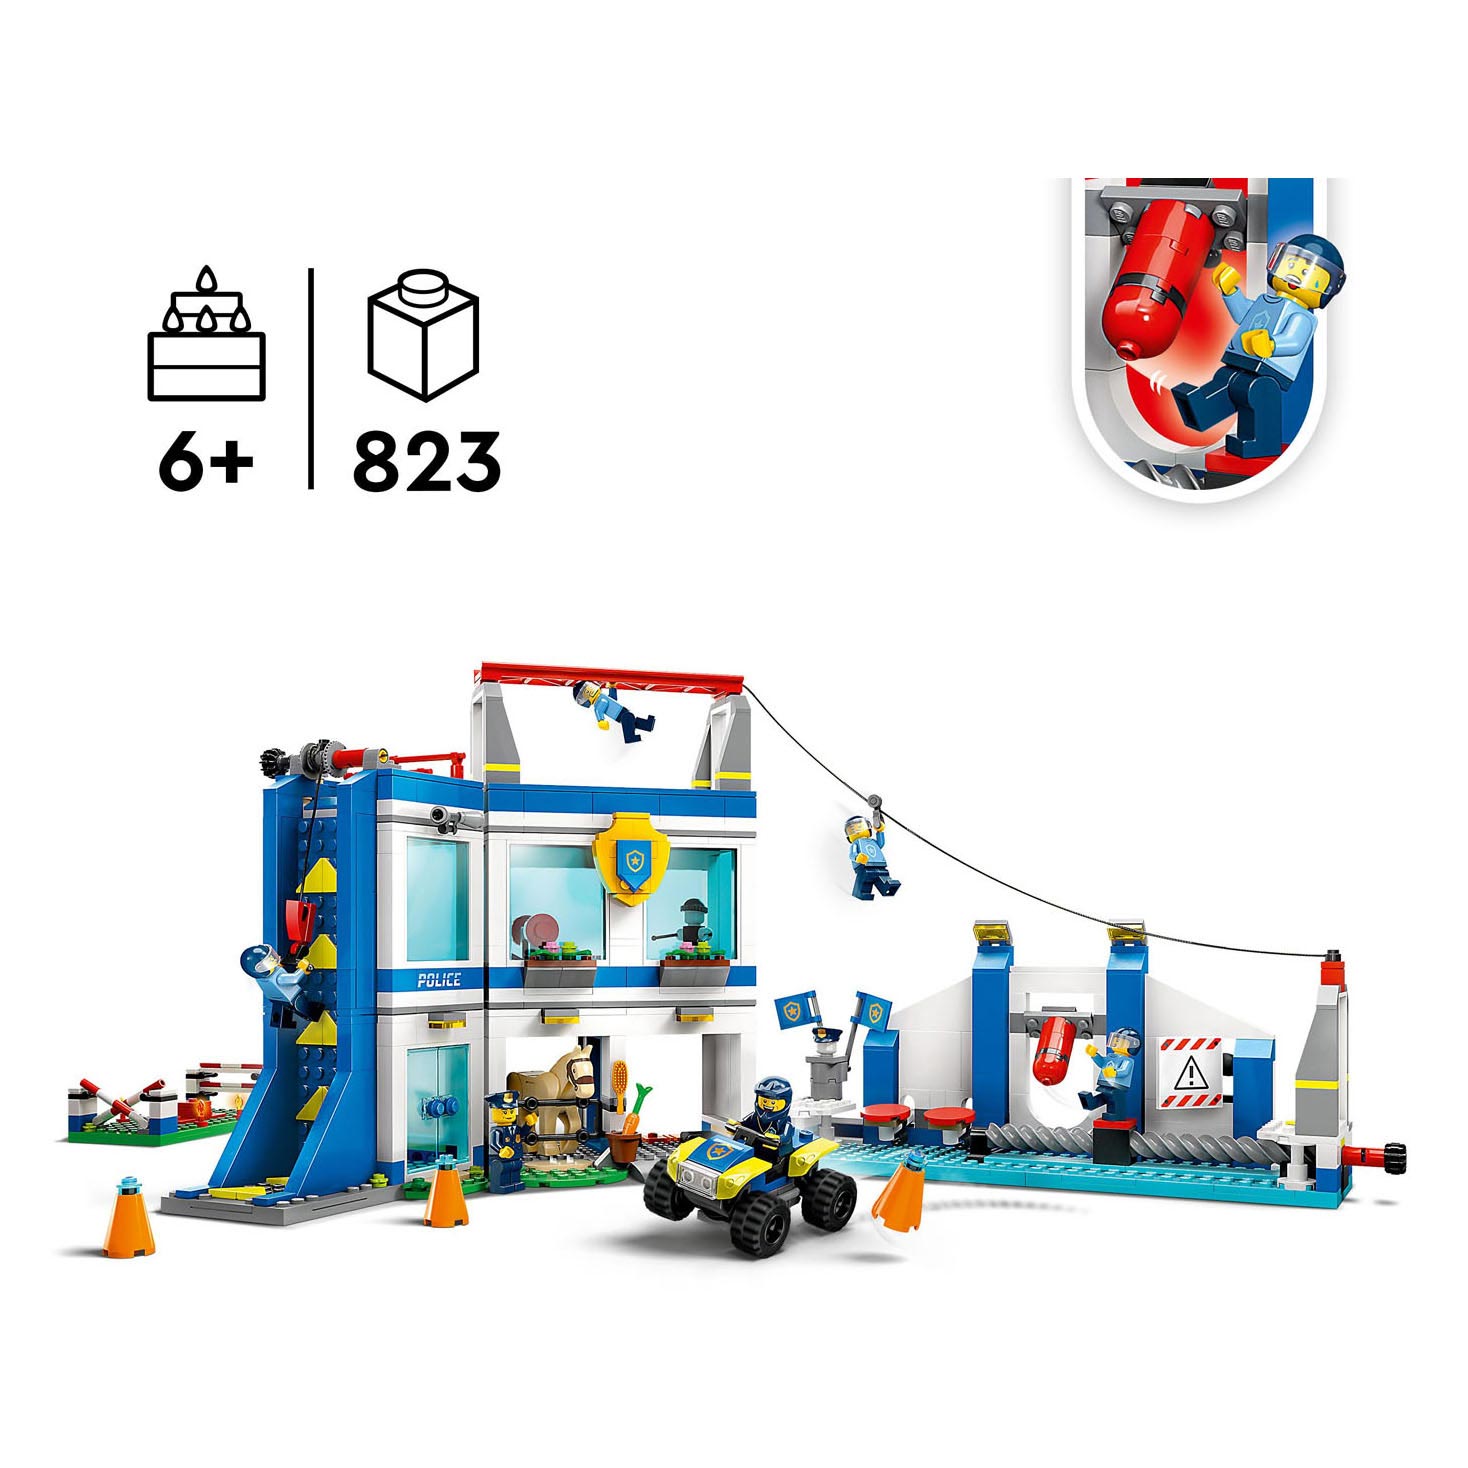 LEGO City 60372 Polizei-Ausbildungsakademie